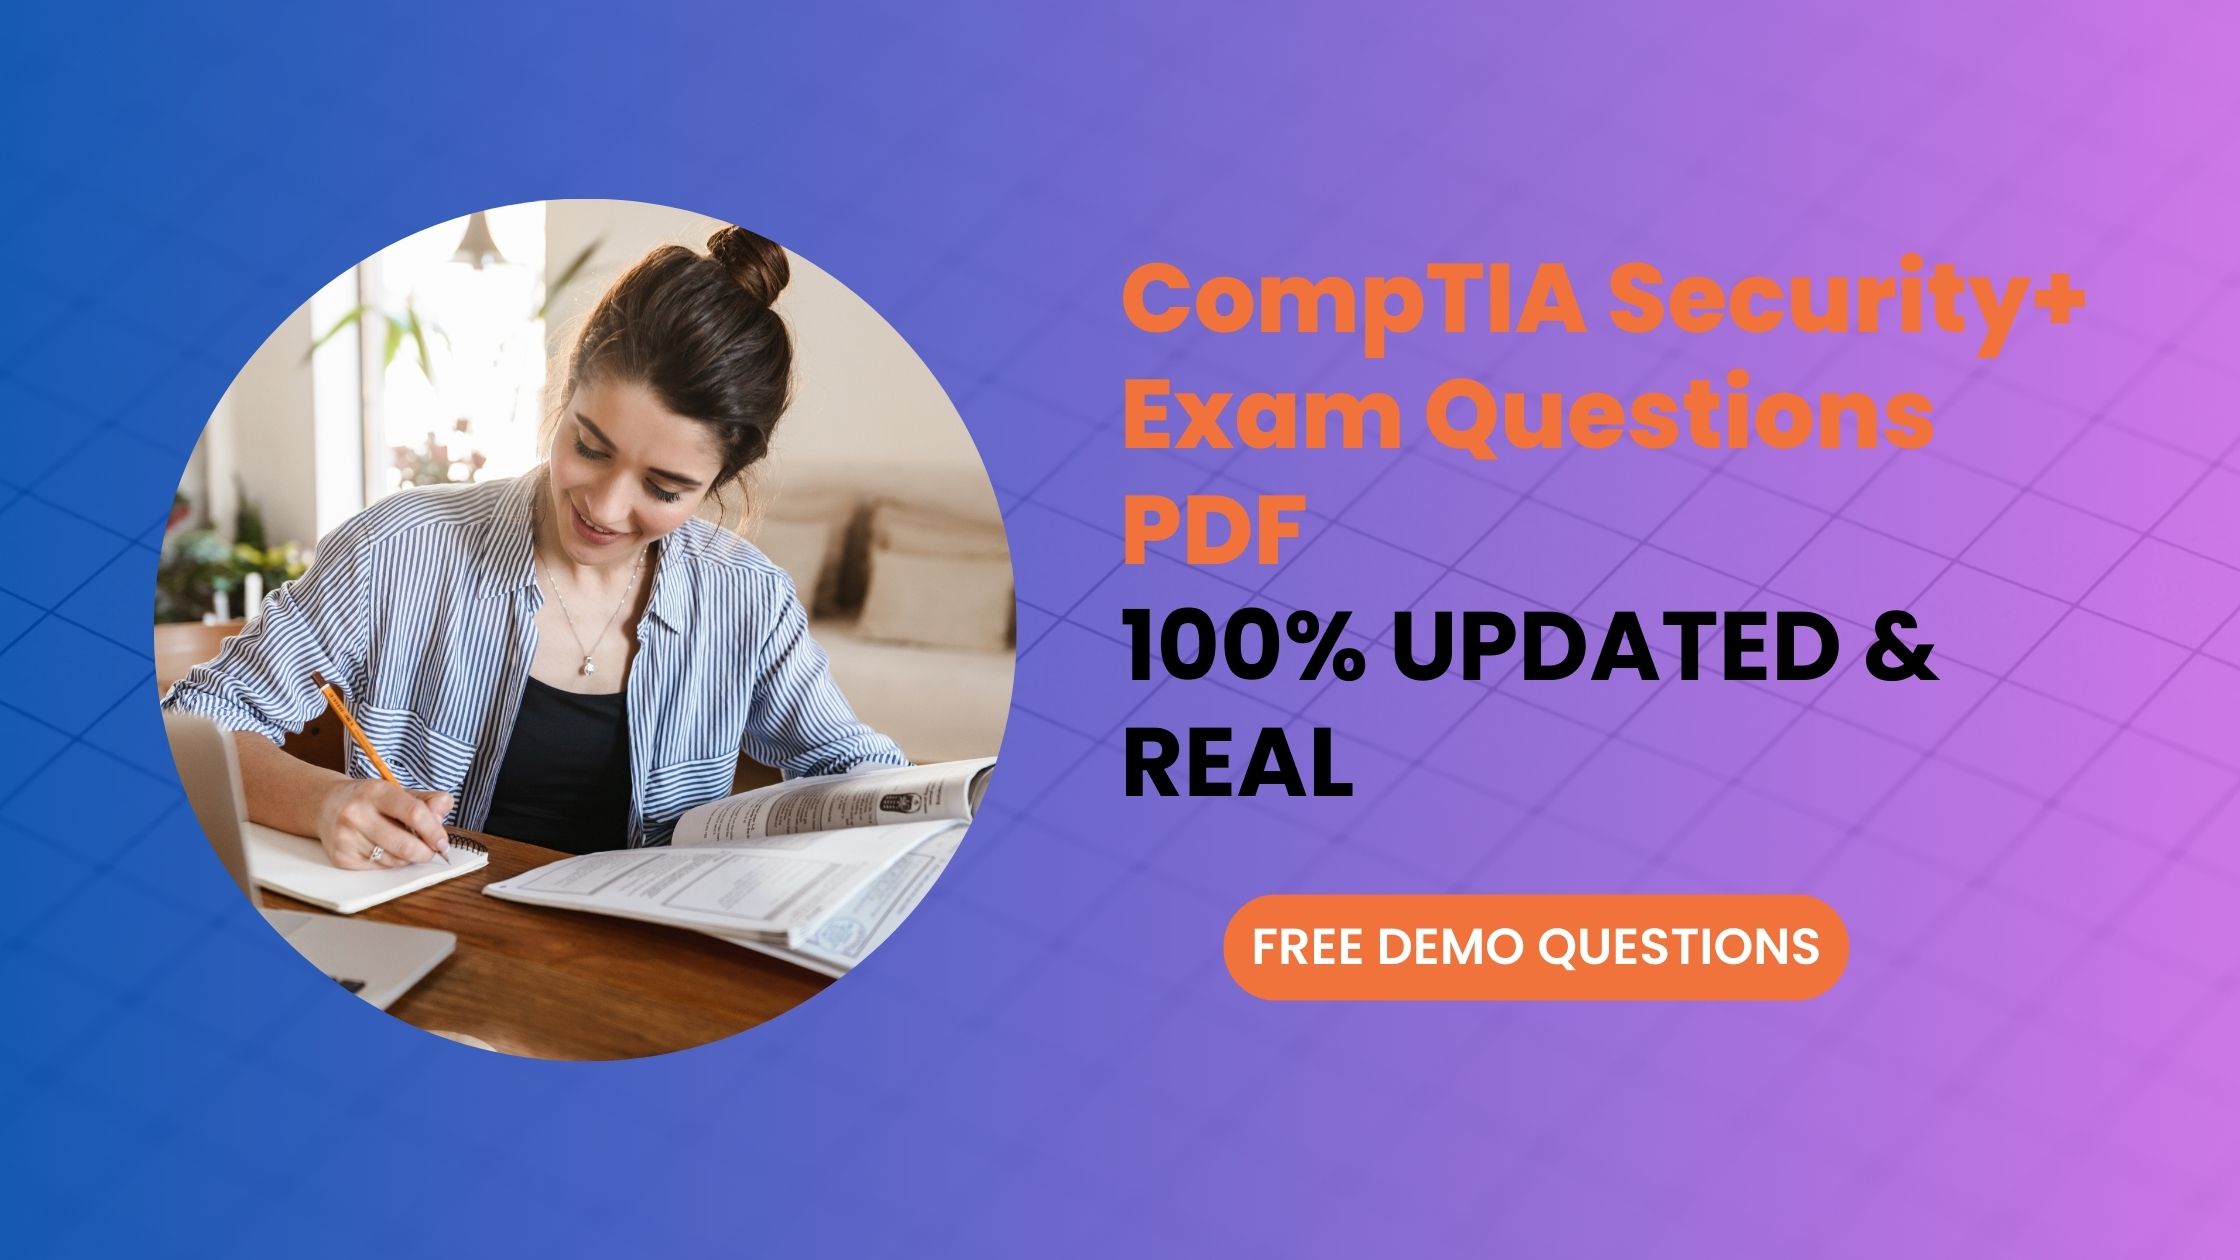 CompTIA Security+ Exam Questions PDF